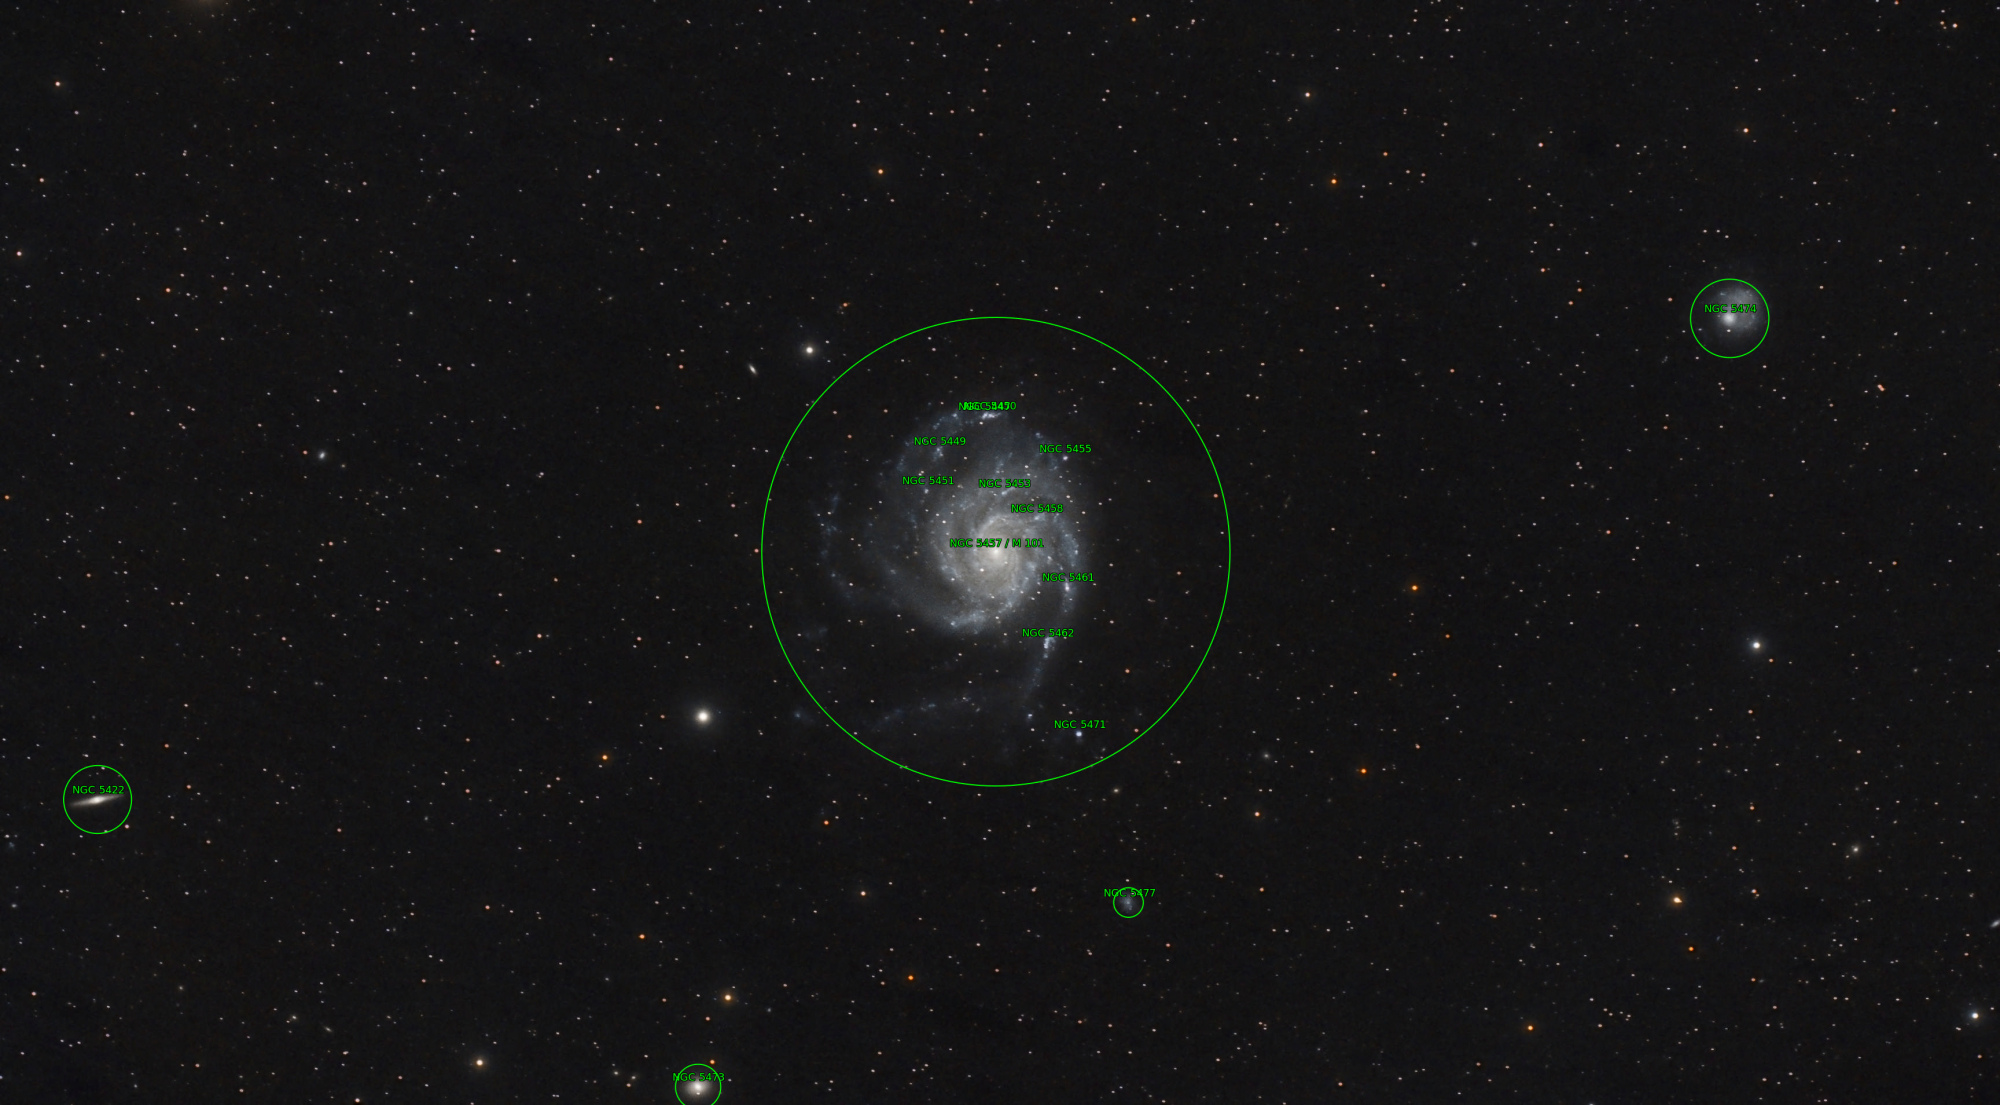 Astrometry_M101.thumb.jpeg.b3783cbe1cd118574d59ad69c3fe8277.jpeg